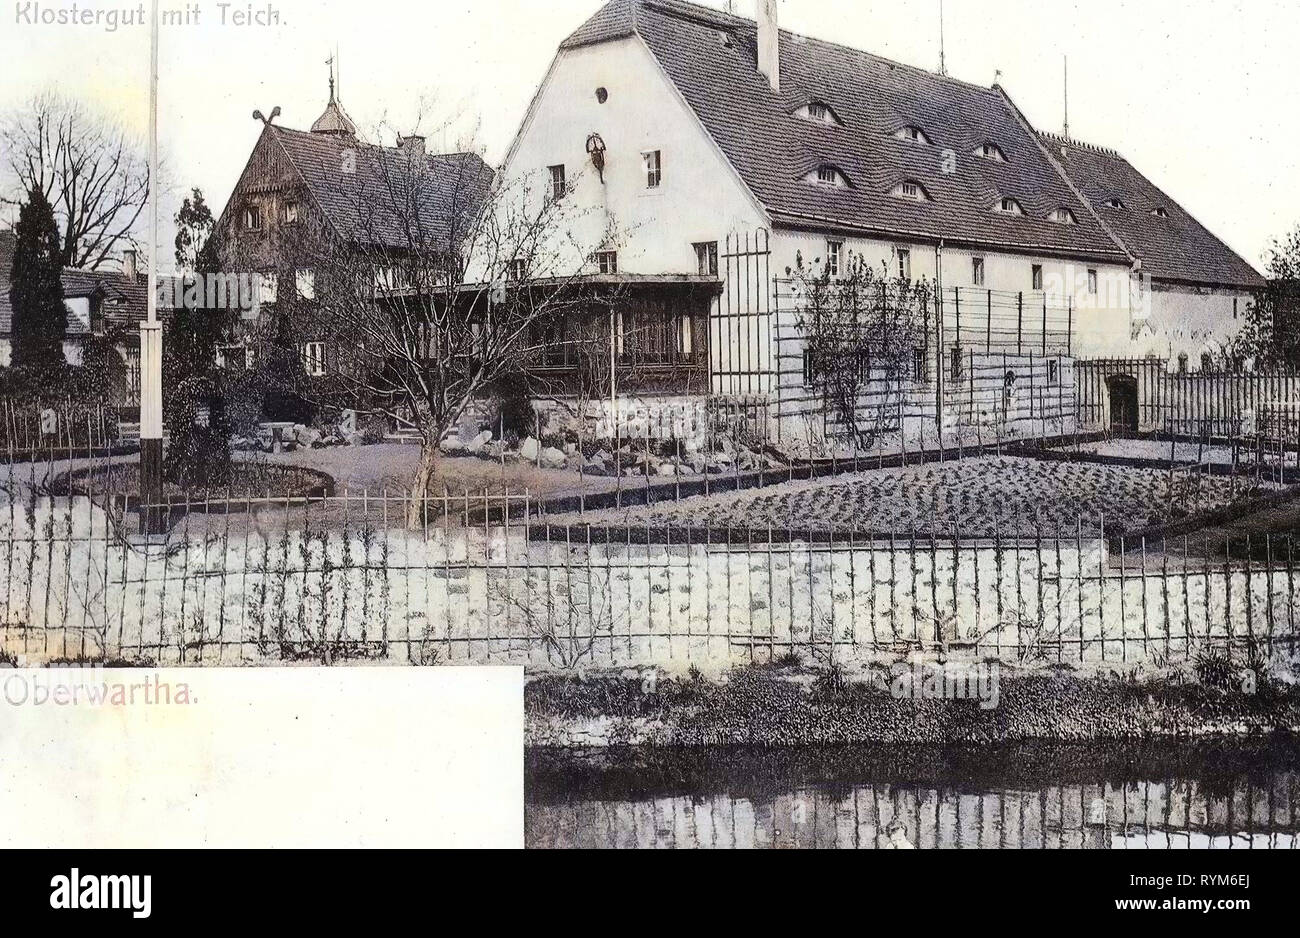 Stagni in Sassonia, Barche in Sassonia, monumenti e memoriali in Sassonia, monasteri in Sassonia, Oberwartha, 1903, Dresda, Klostergut mit Teich, Germania Foto Stock